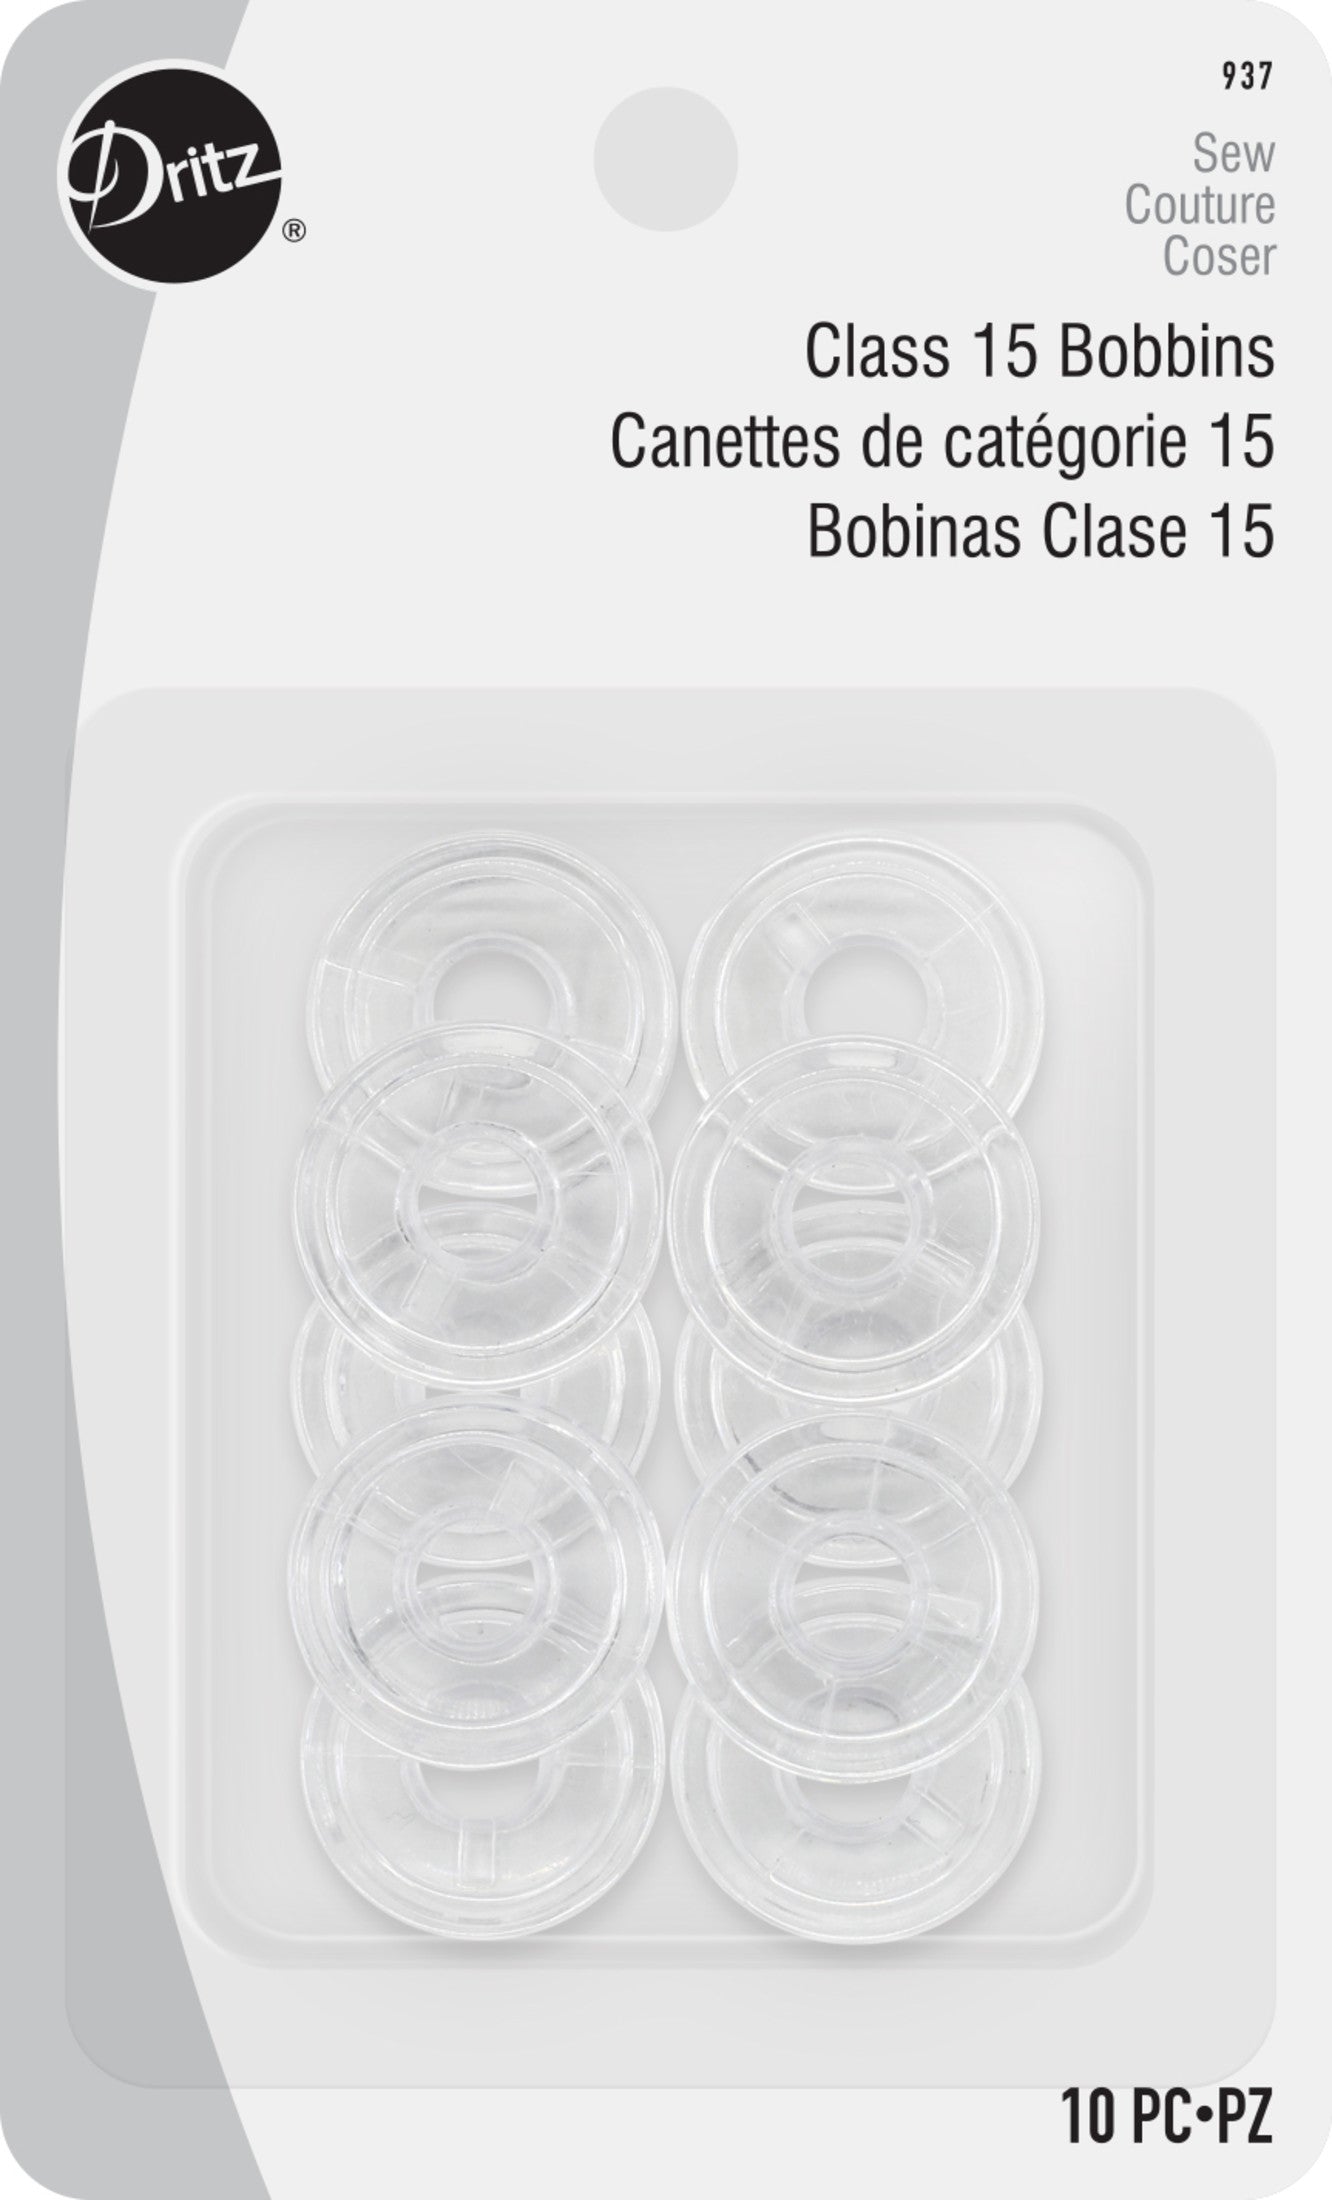 Singer Transparent Plastic Class 15 Bobbins - Threaded 12/Pkg